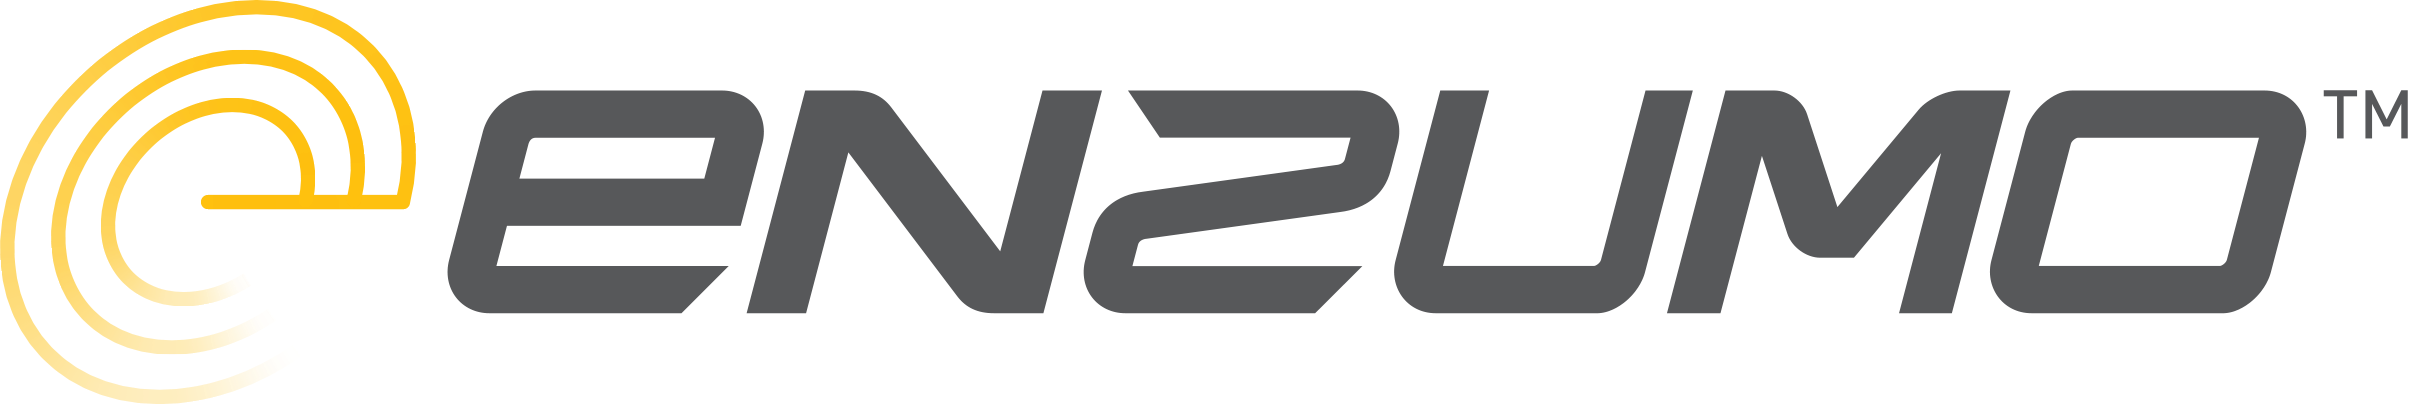 Enzumo_logo